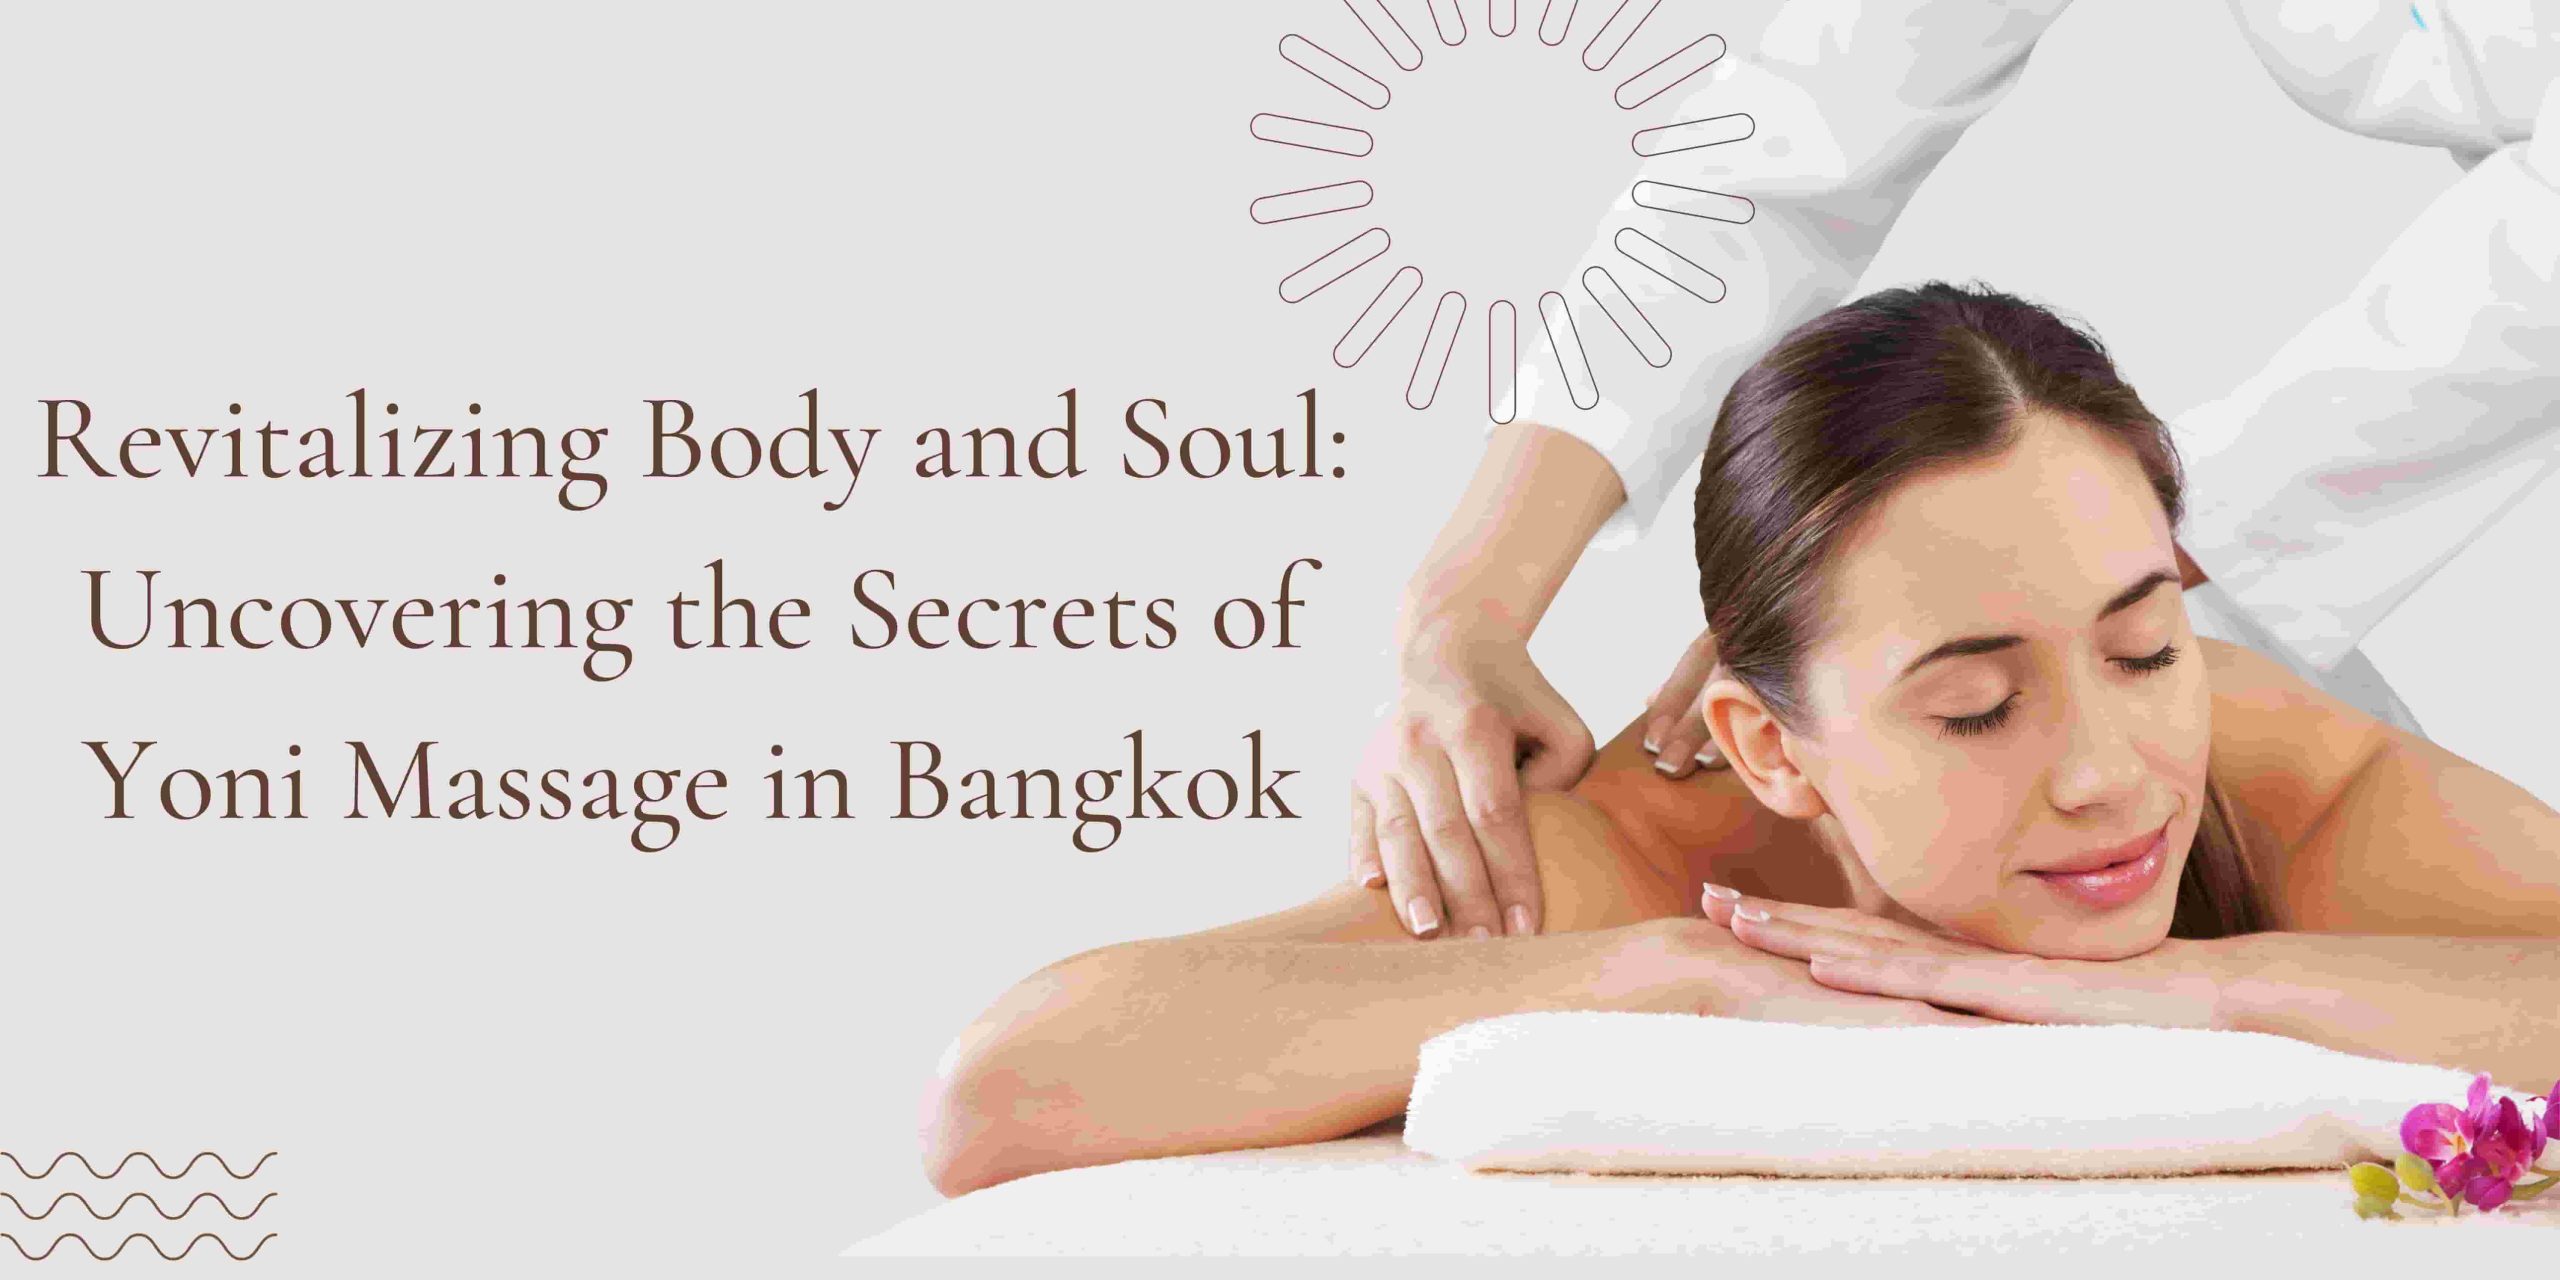 david knoblock share yoni massage therapy youtube photos